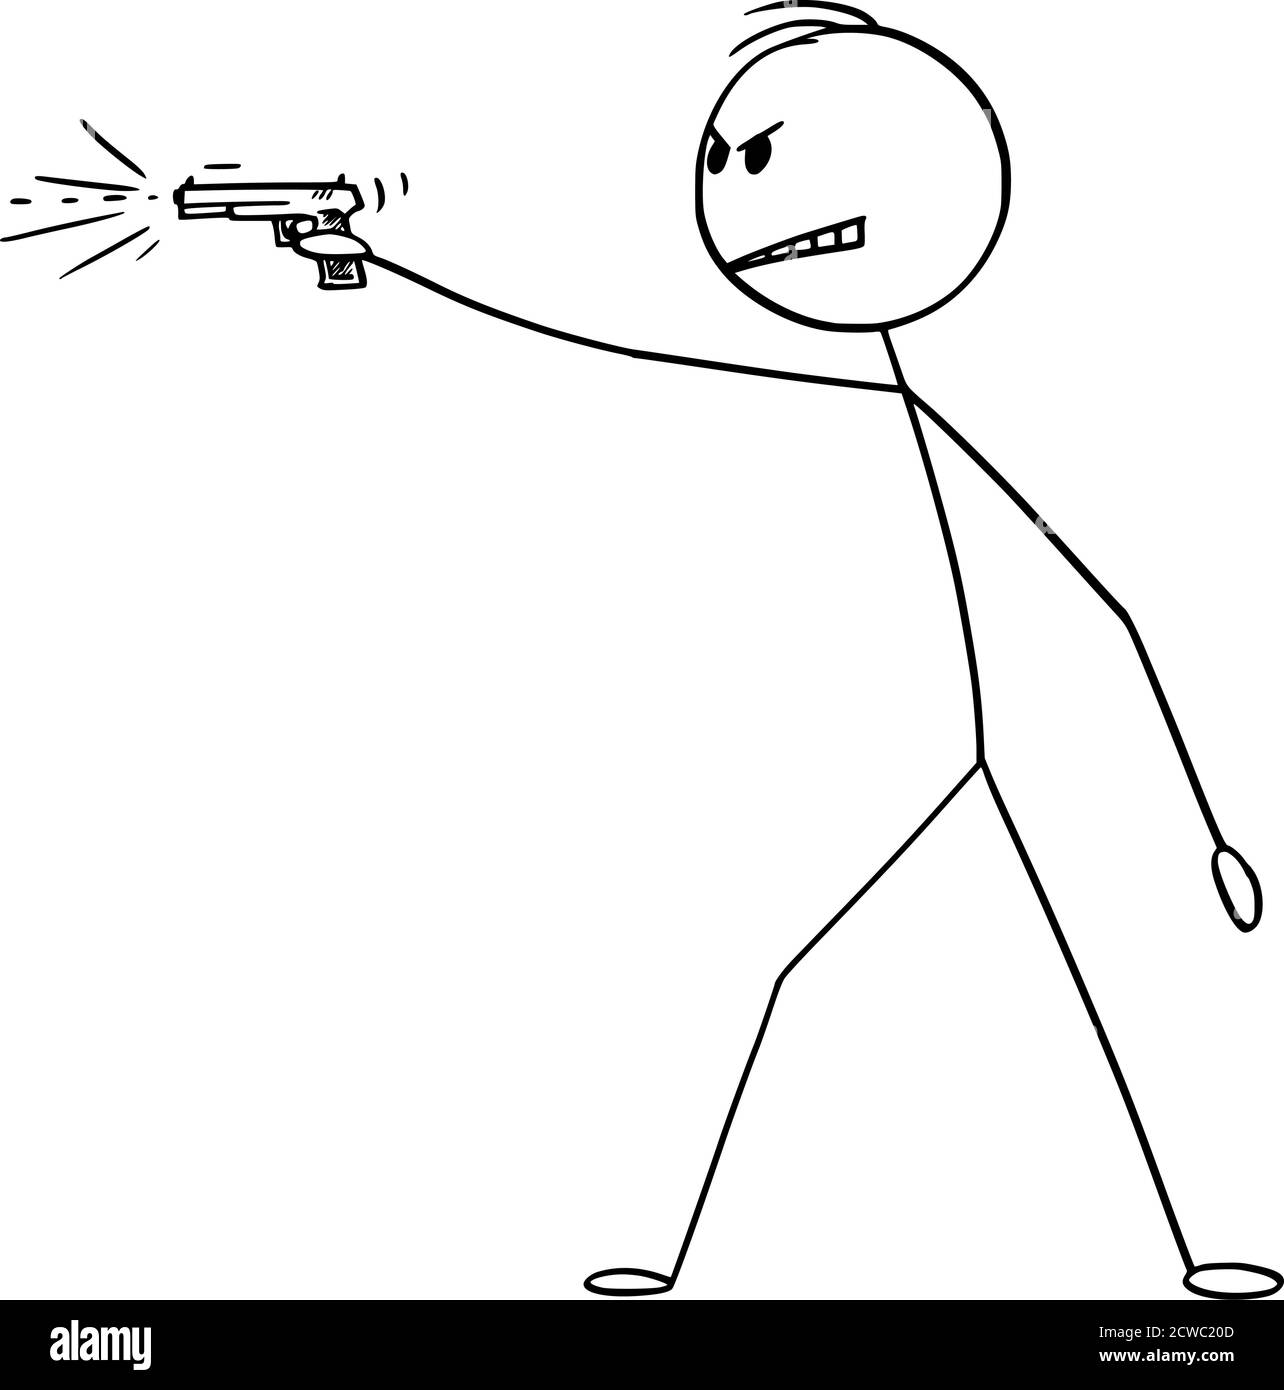 Vector cartoon stick figure drawing conceptual illustration of dangerous angry man shooting a weapon, gun handgun or pistol. Stock Vector